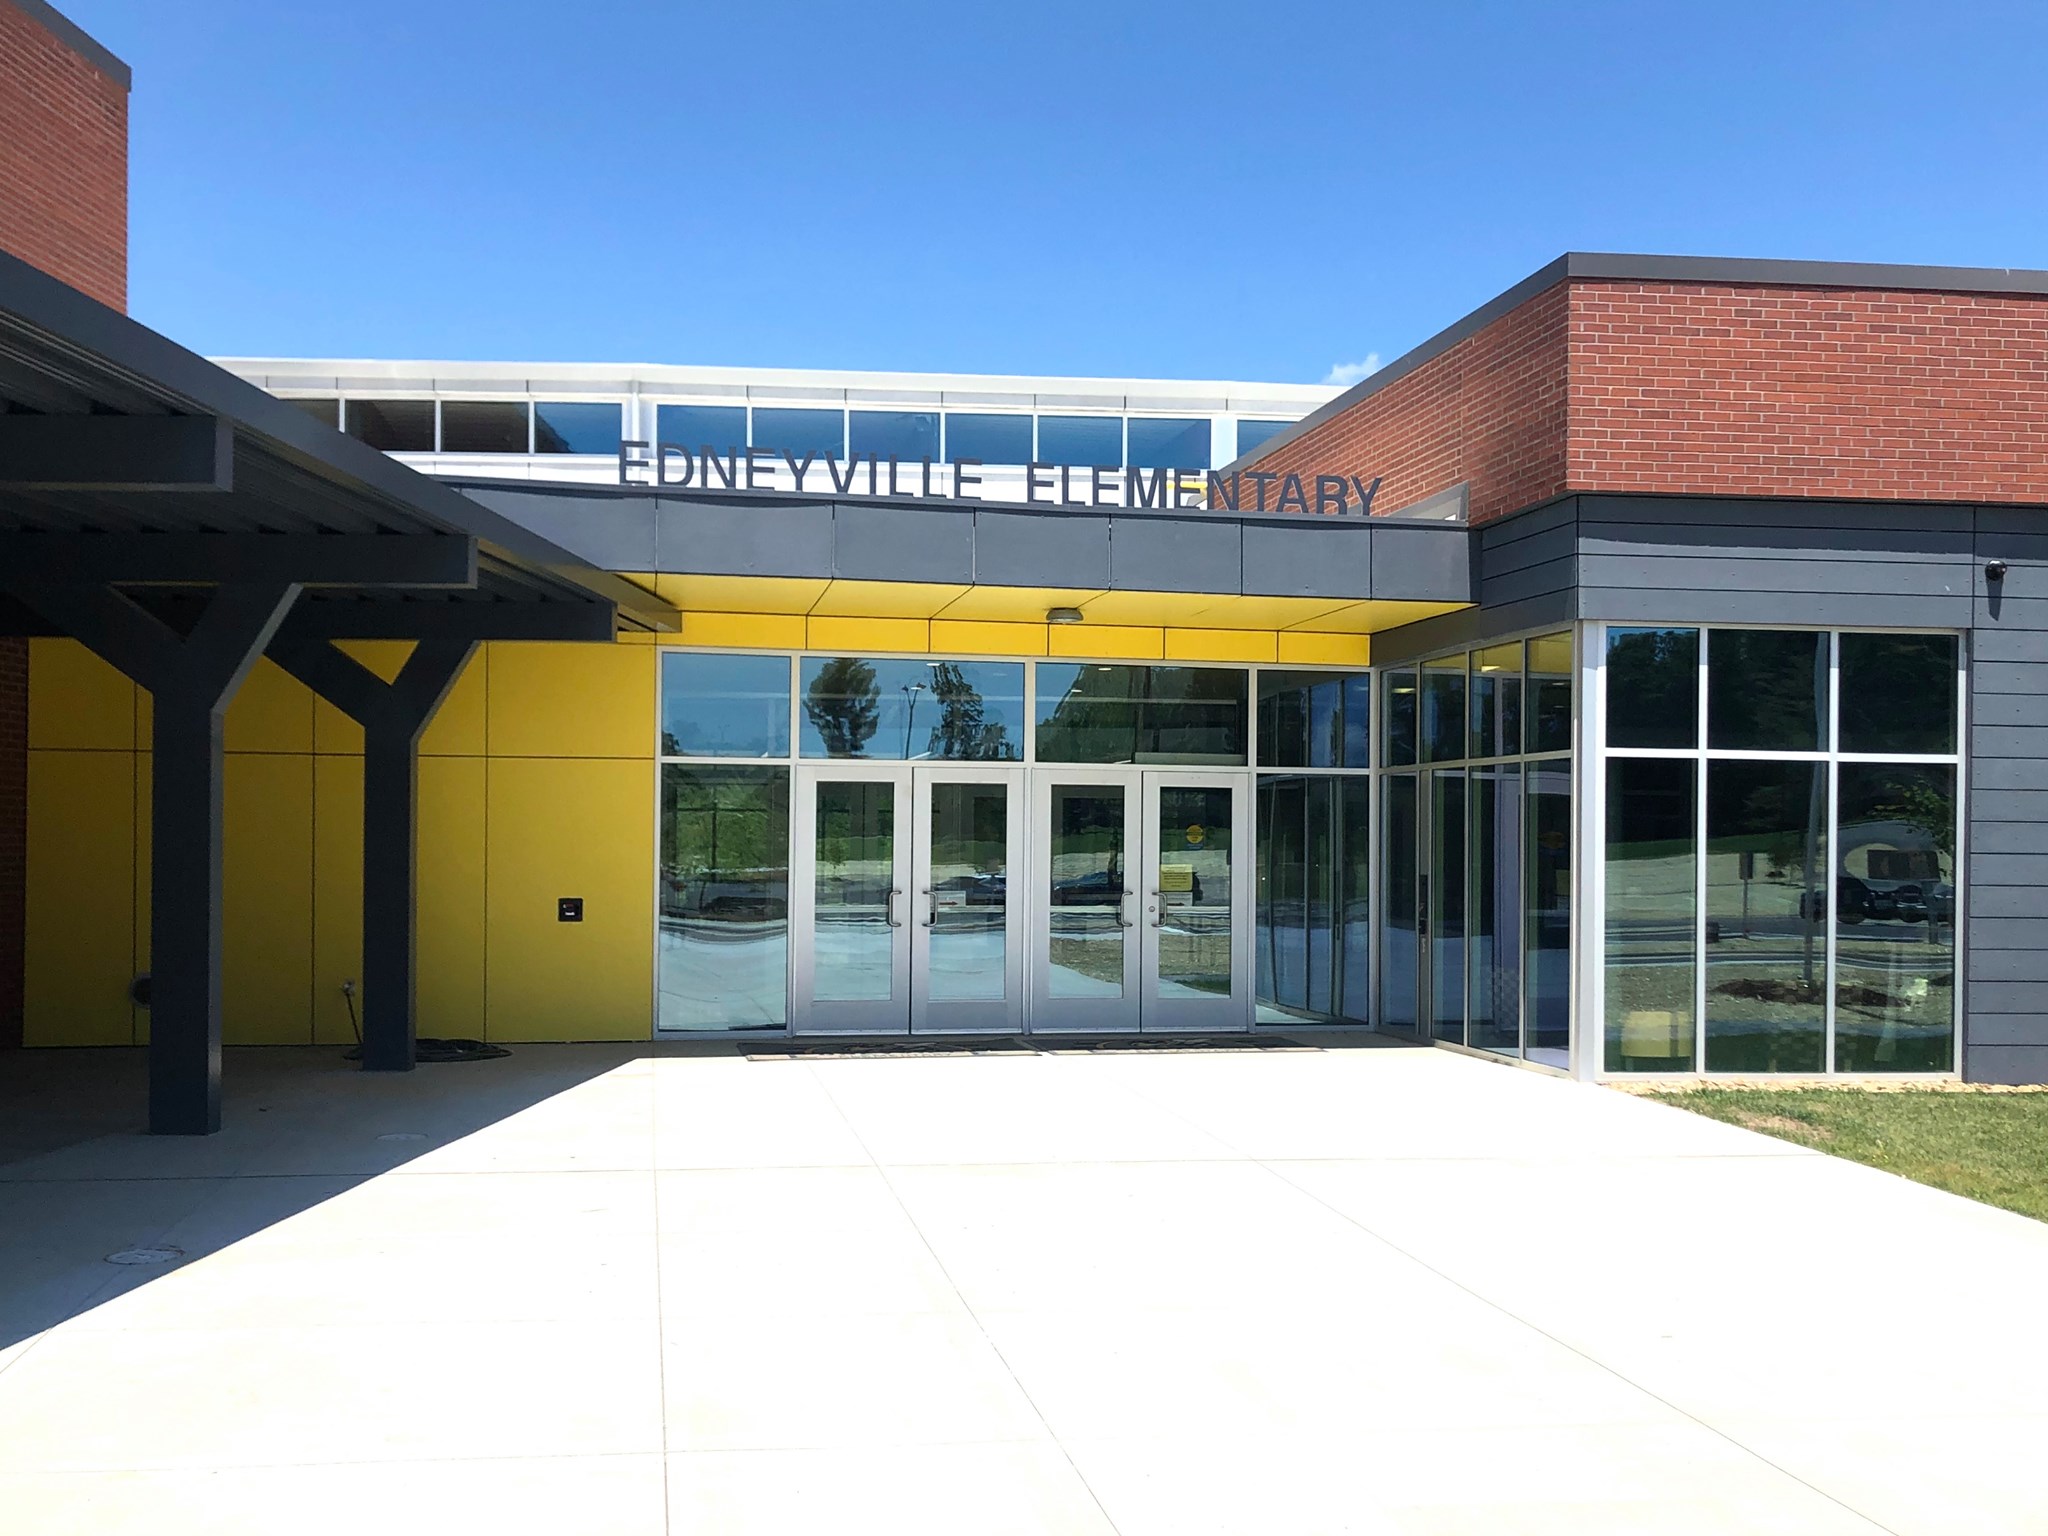 Photo of Edneyville Elementary exterior